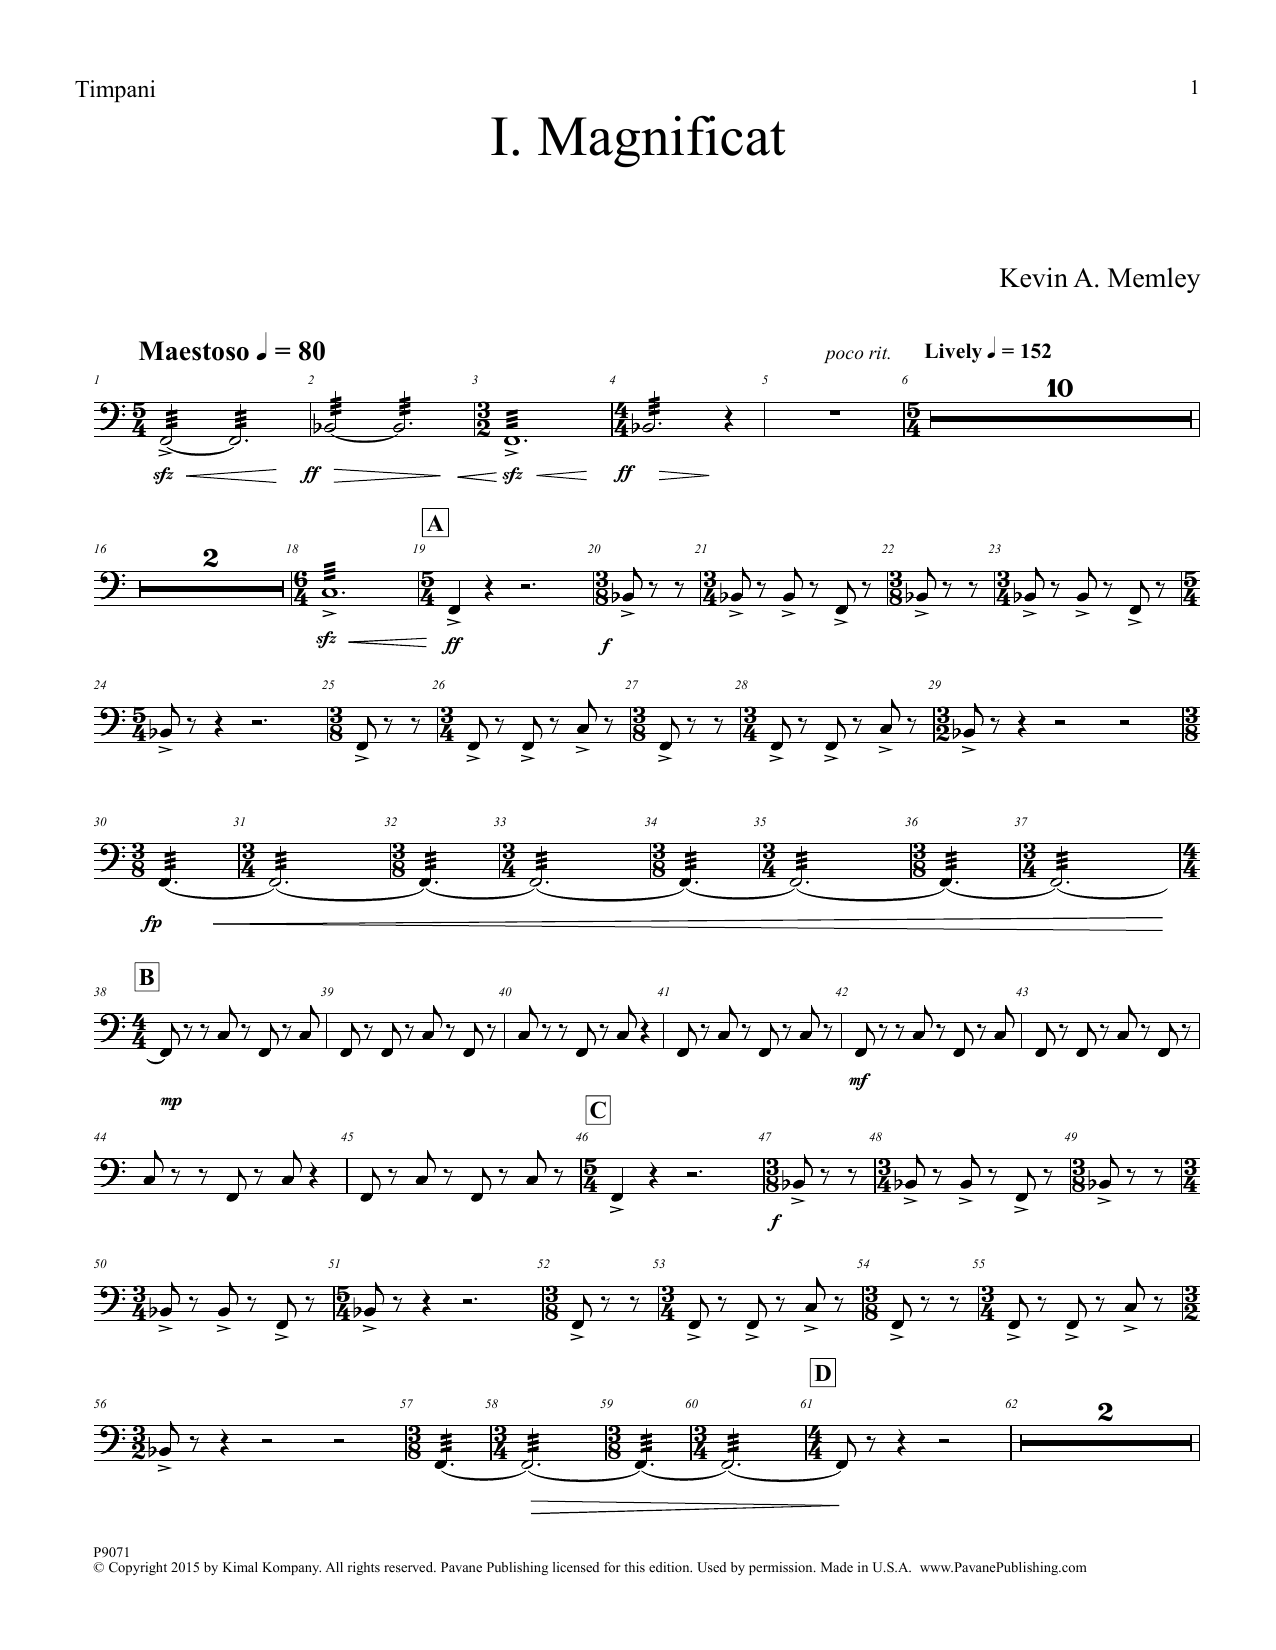 Download Kevin A. Memley Magnificat - Timpani Sheet Music